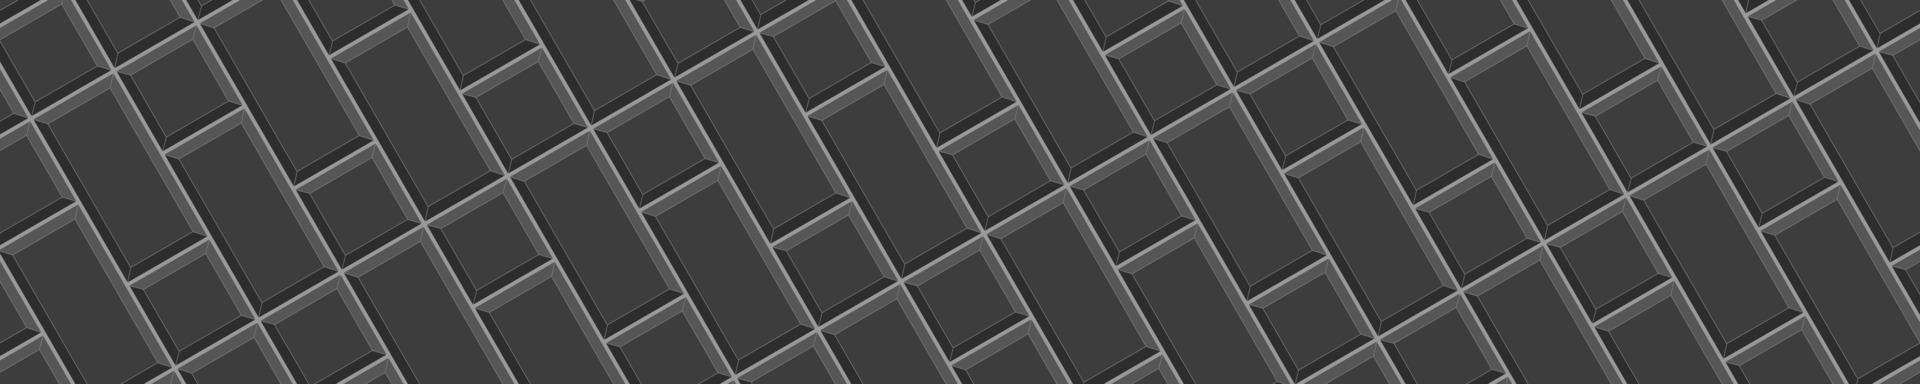 Black squares and rectangles tile in diagonal arrangement. Ceramic or stone brick wall background. Kitchen backsplash or bathroom floor seamless pattern. Facade texture vector